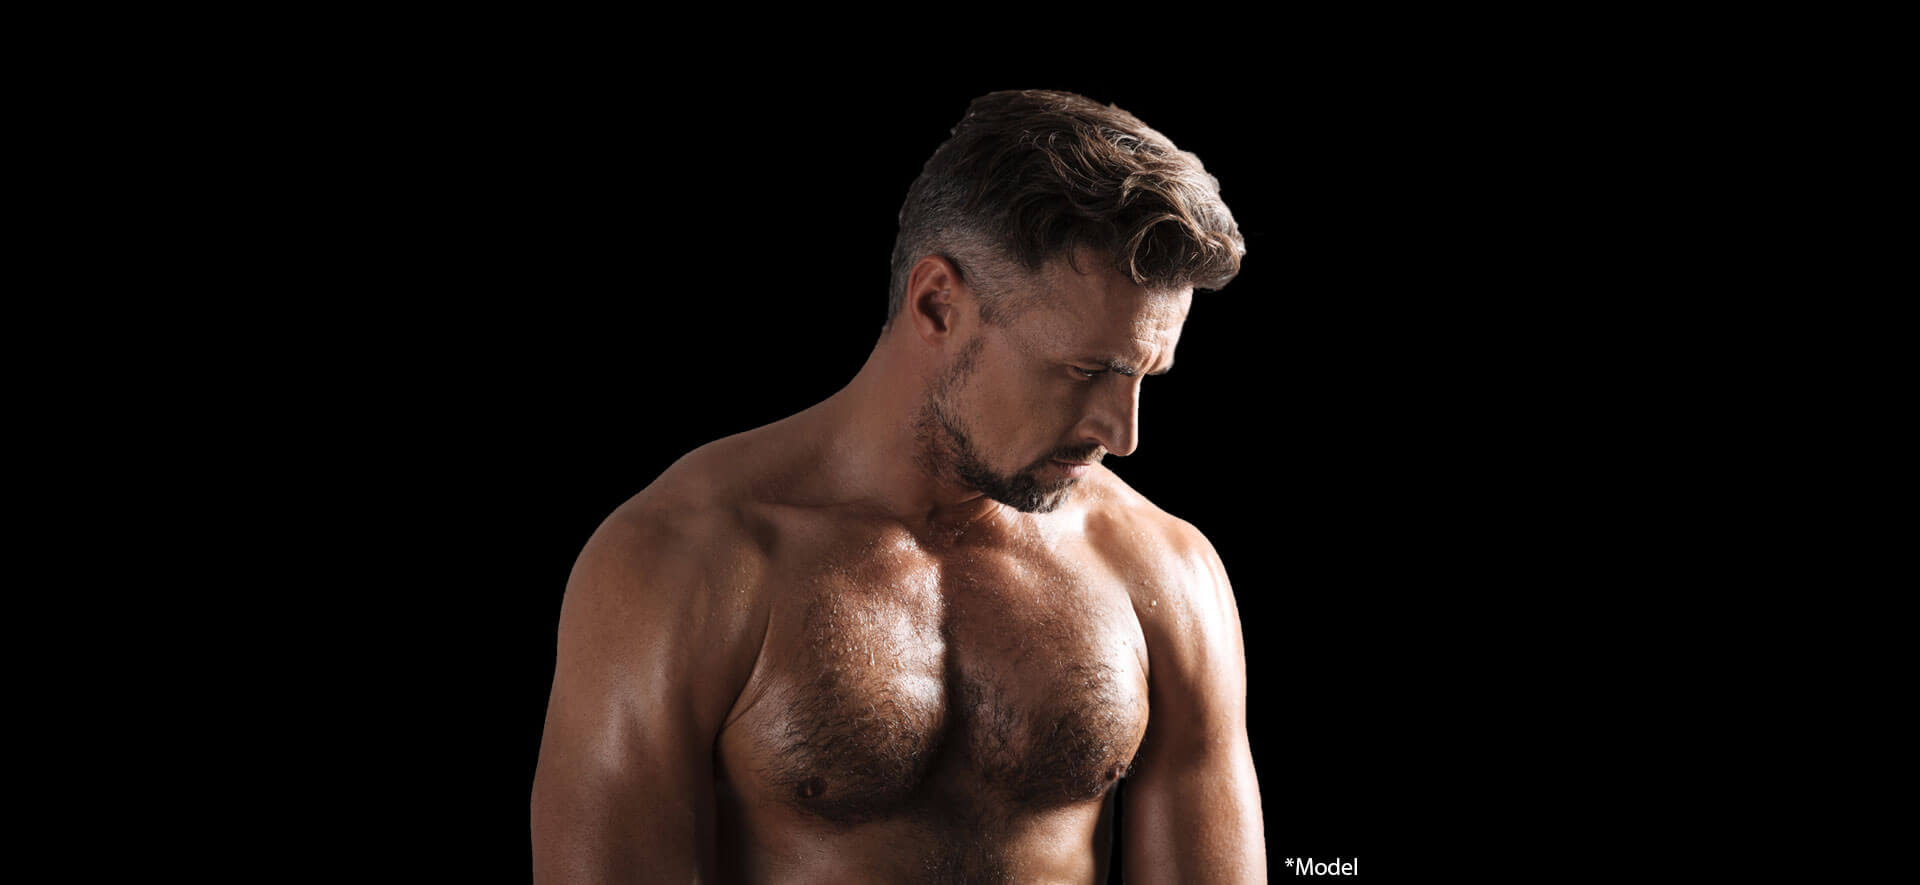 Close up portrait of a muscular mature shirtless sportsman